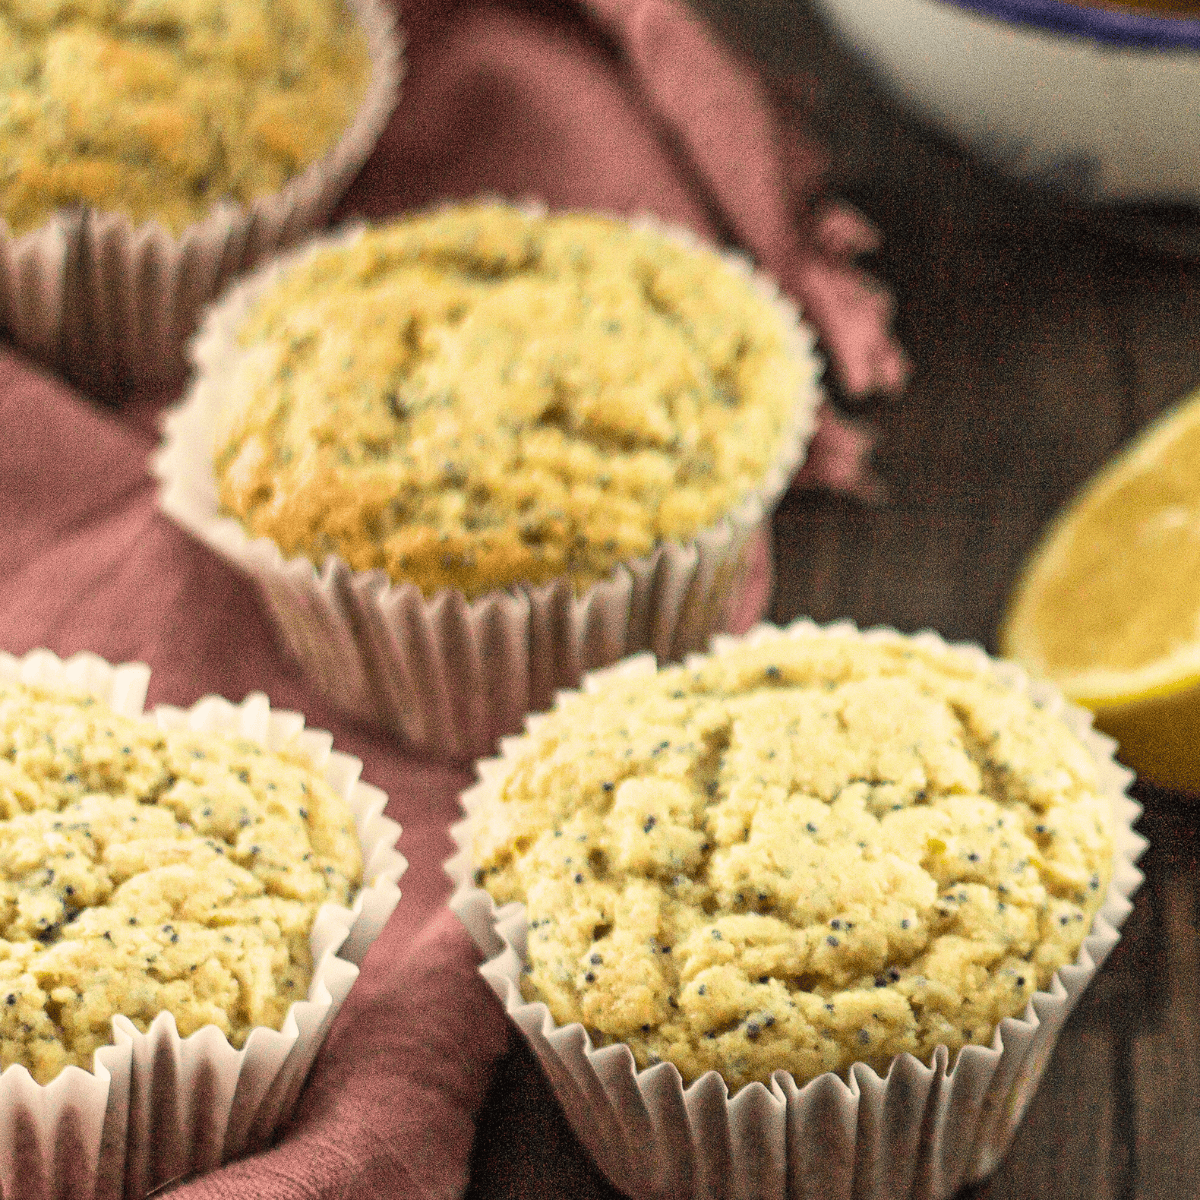 A tray of lemon muffins.